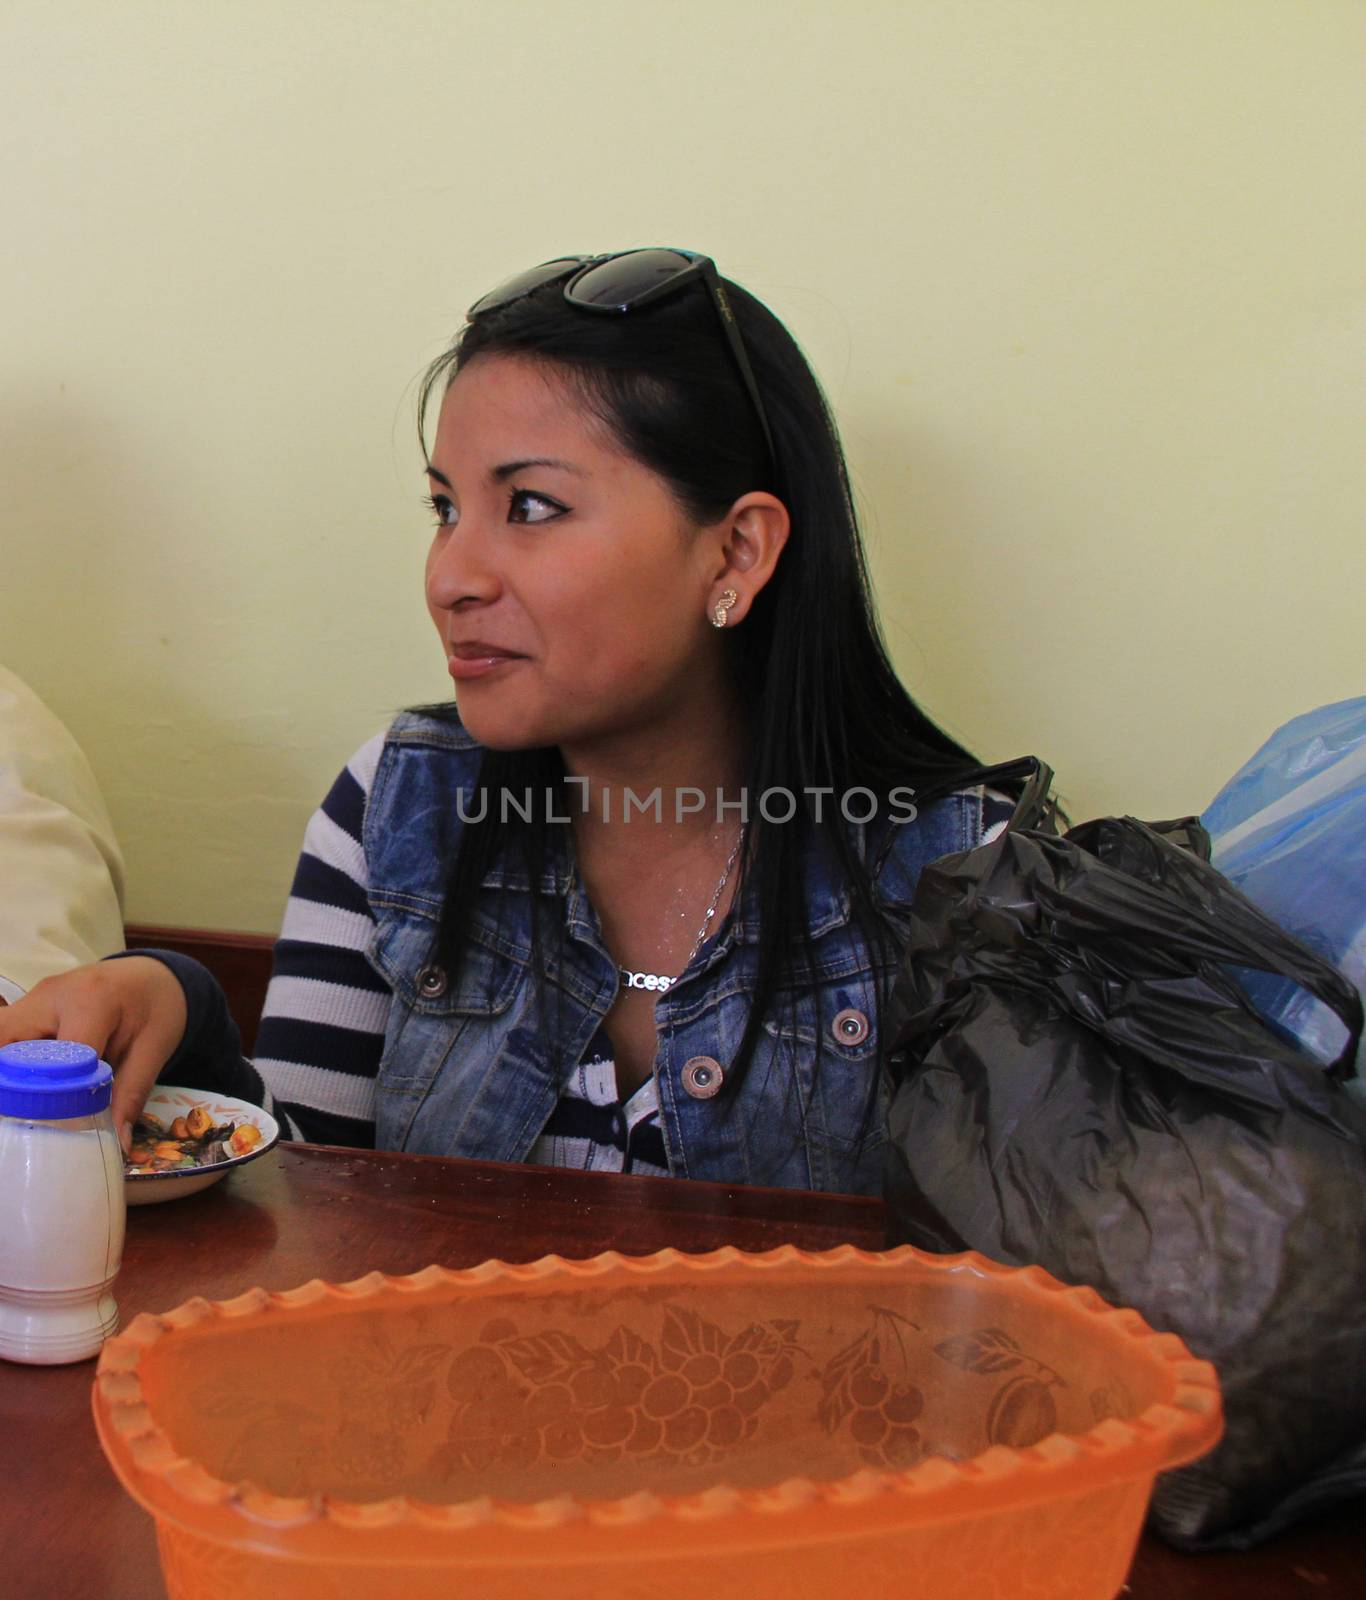 A young lady posing in a restaurant in Otavalo, Ecuador
24 Nov 2013
No model release
Editorial only